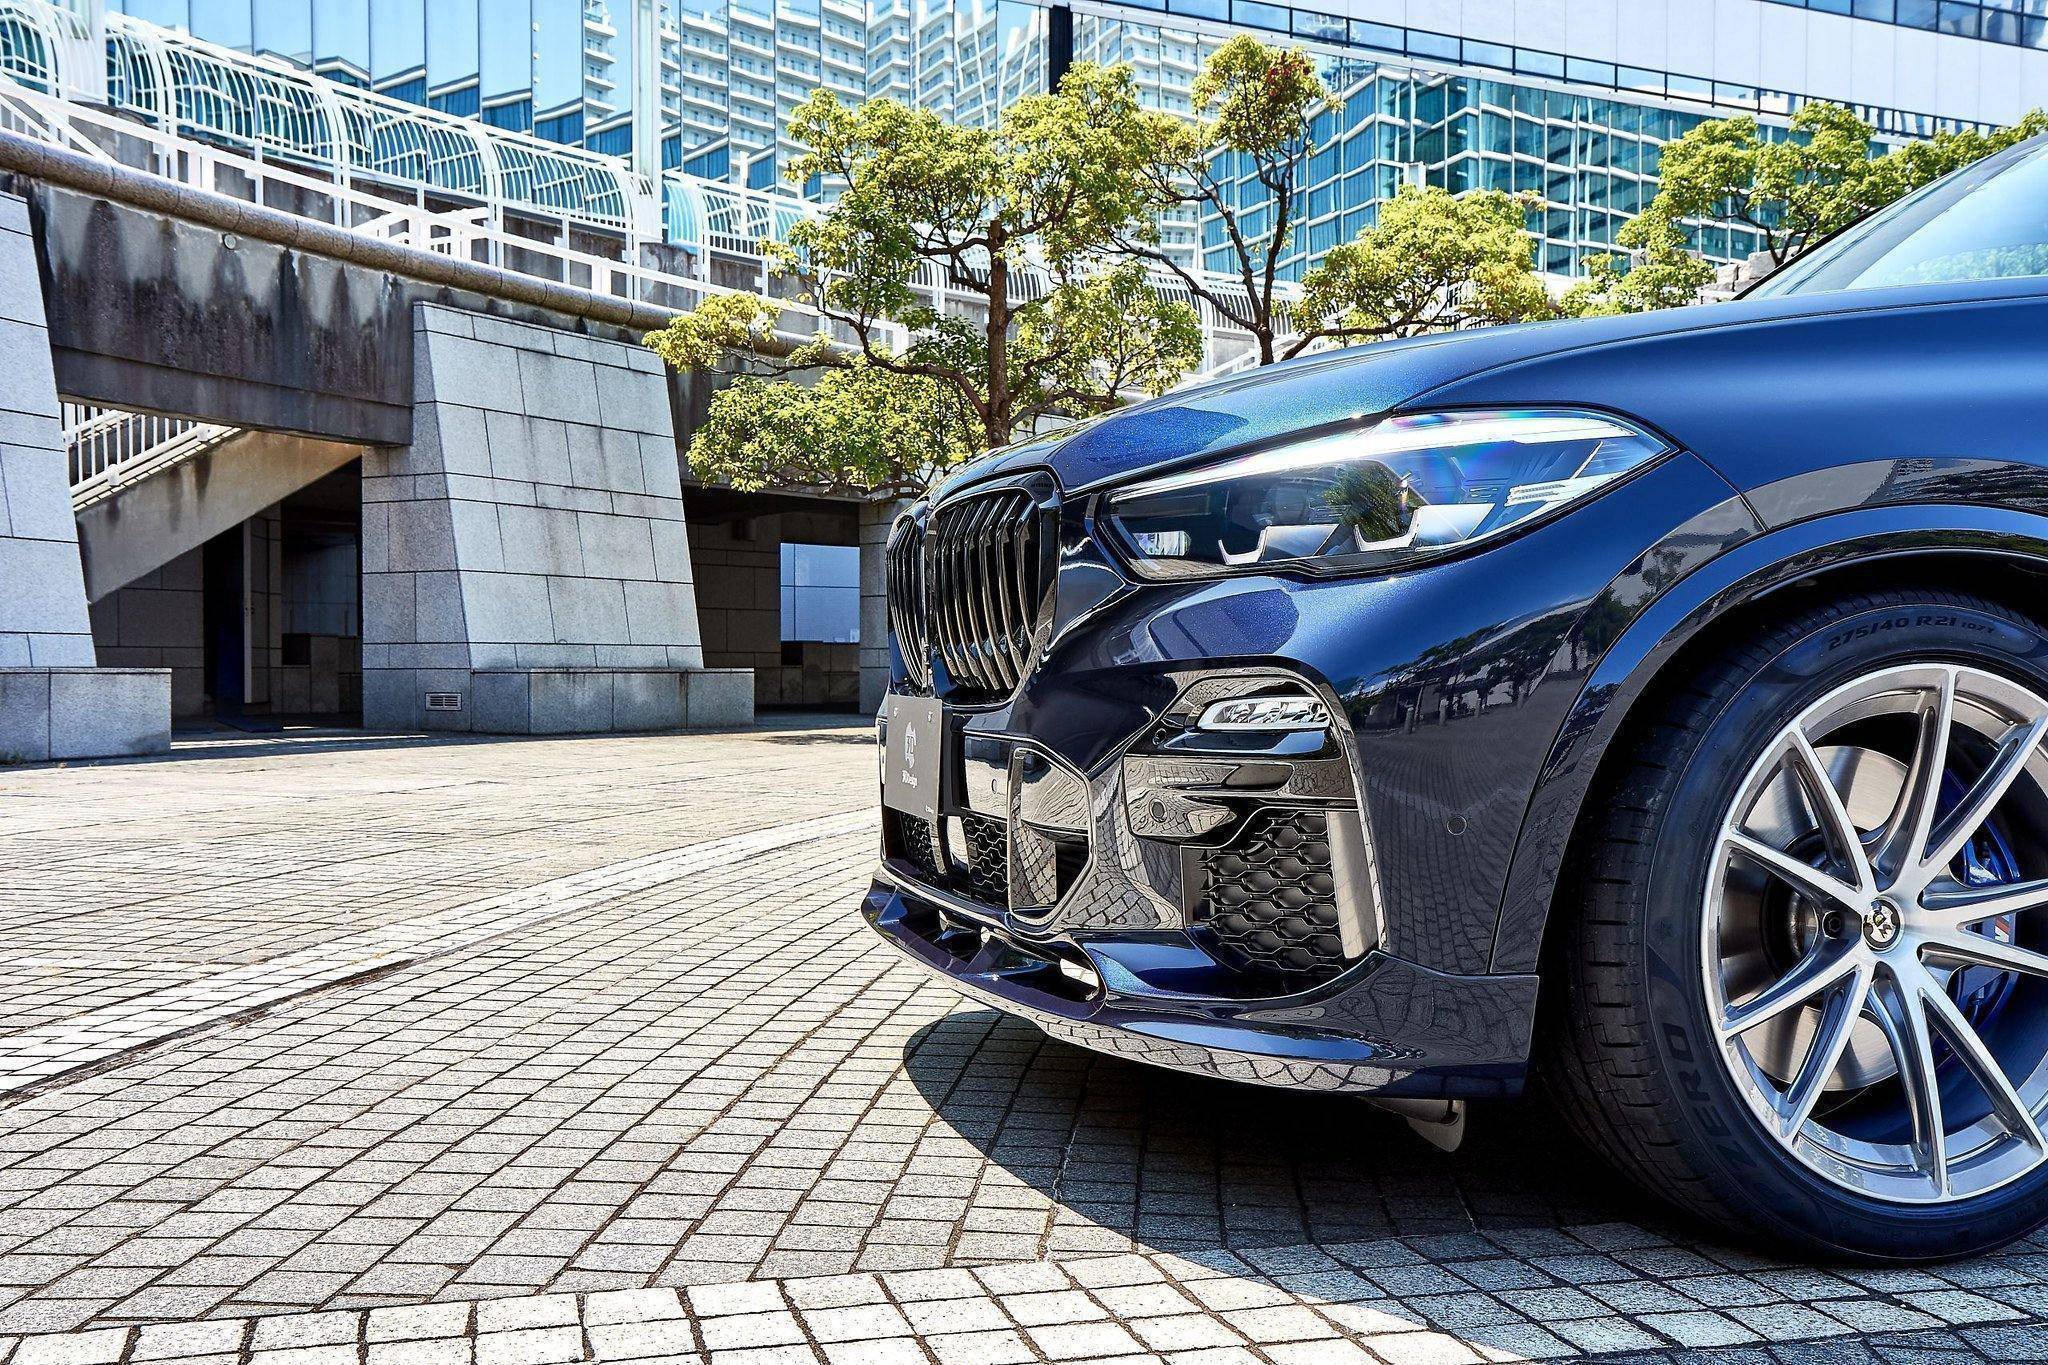 3DDesign Front Splitter for BMW X5 (2019+, G05), Front Lips & Splitters, 3DDesign - AUTOID | Premium Automotive Accessories